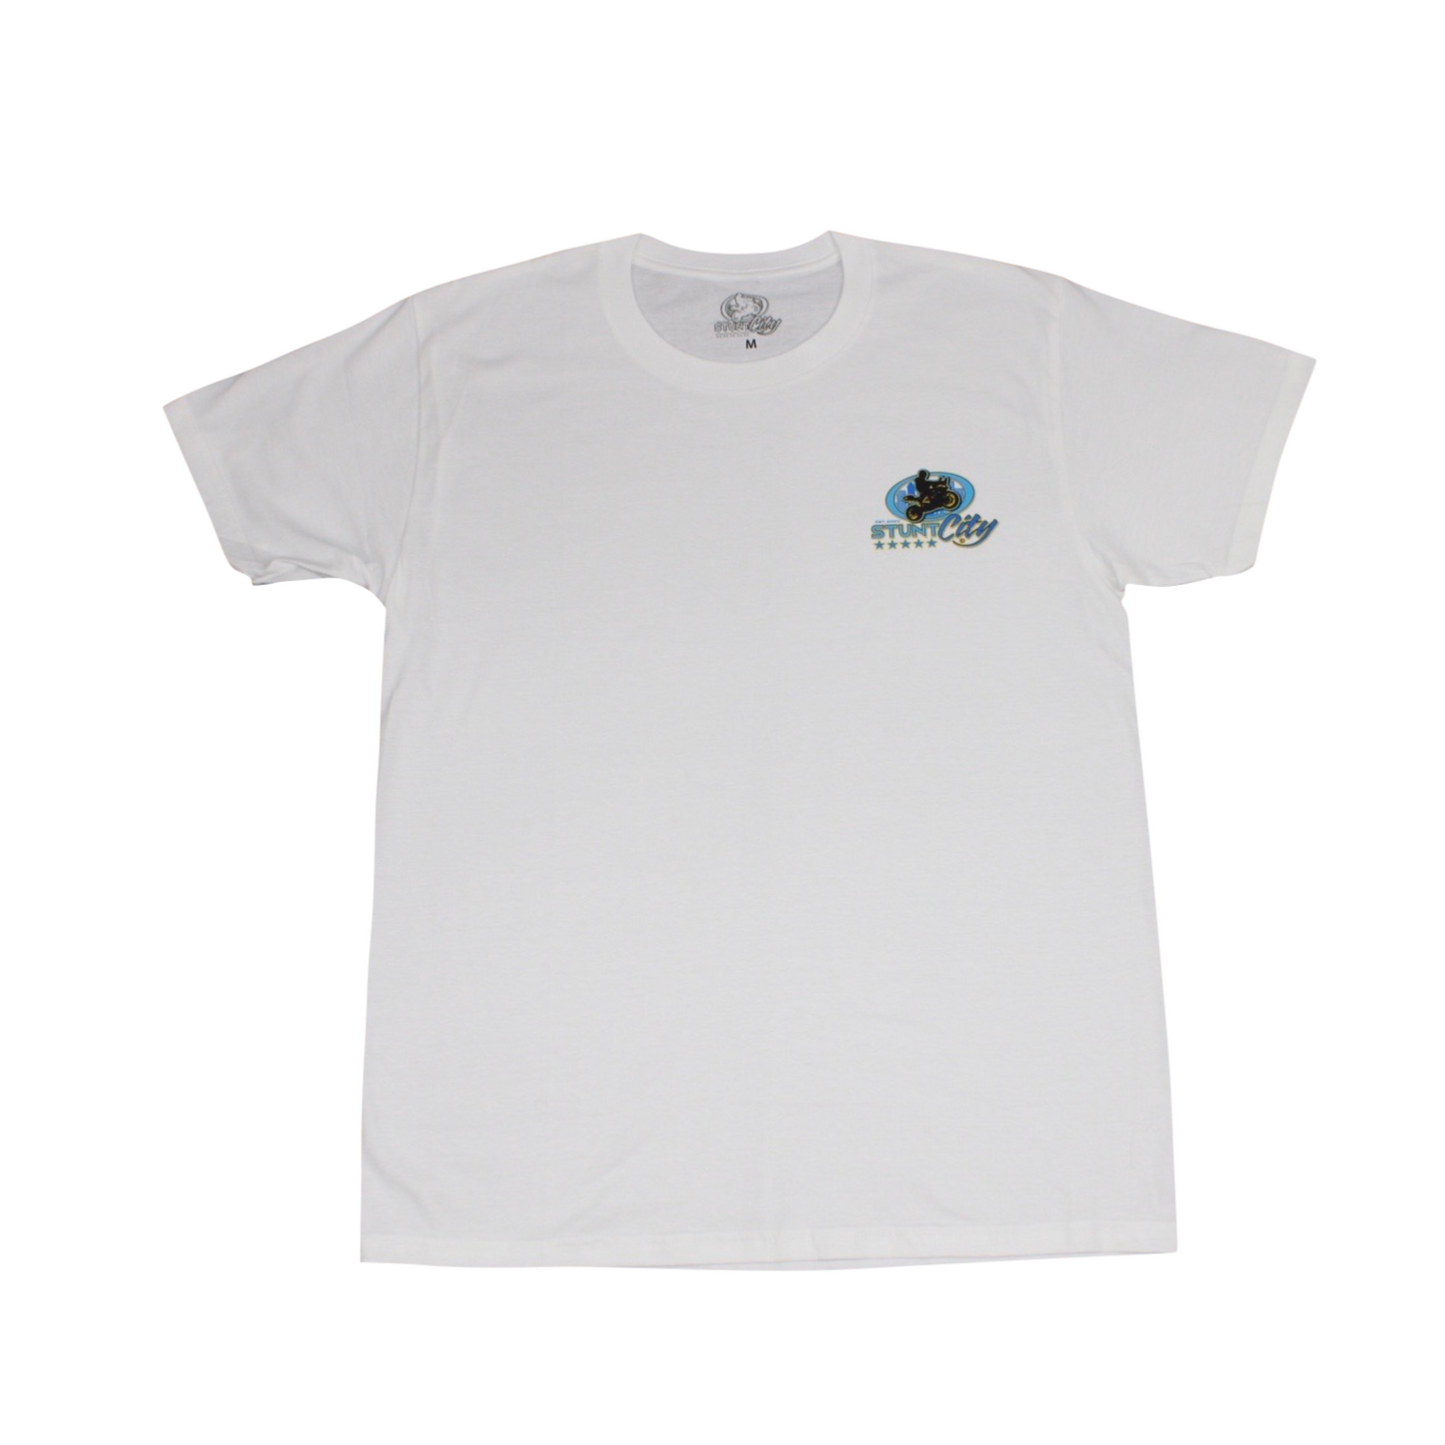 White t-shirt with blue stunt city logo on left chest